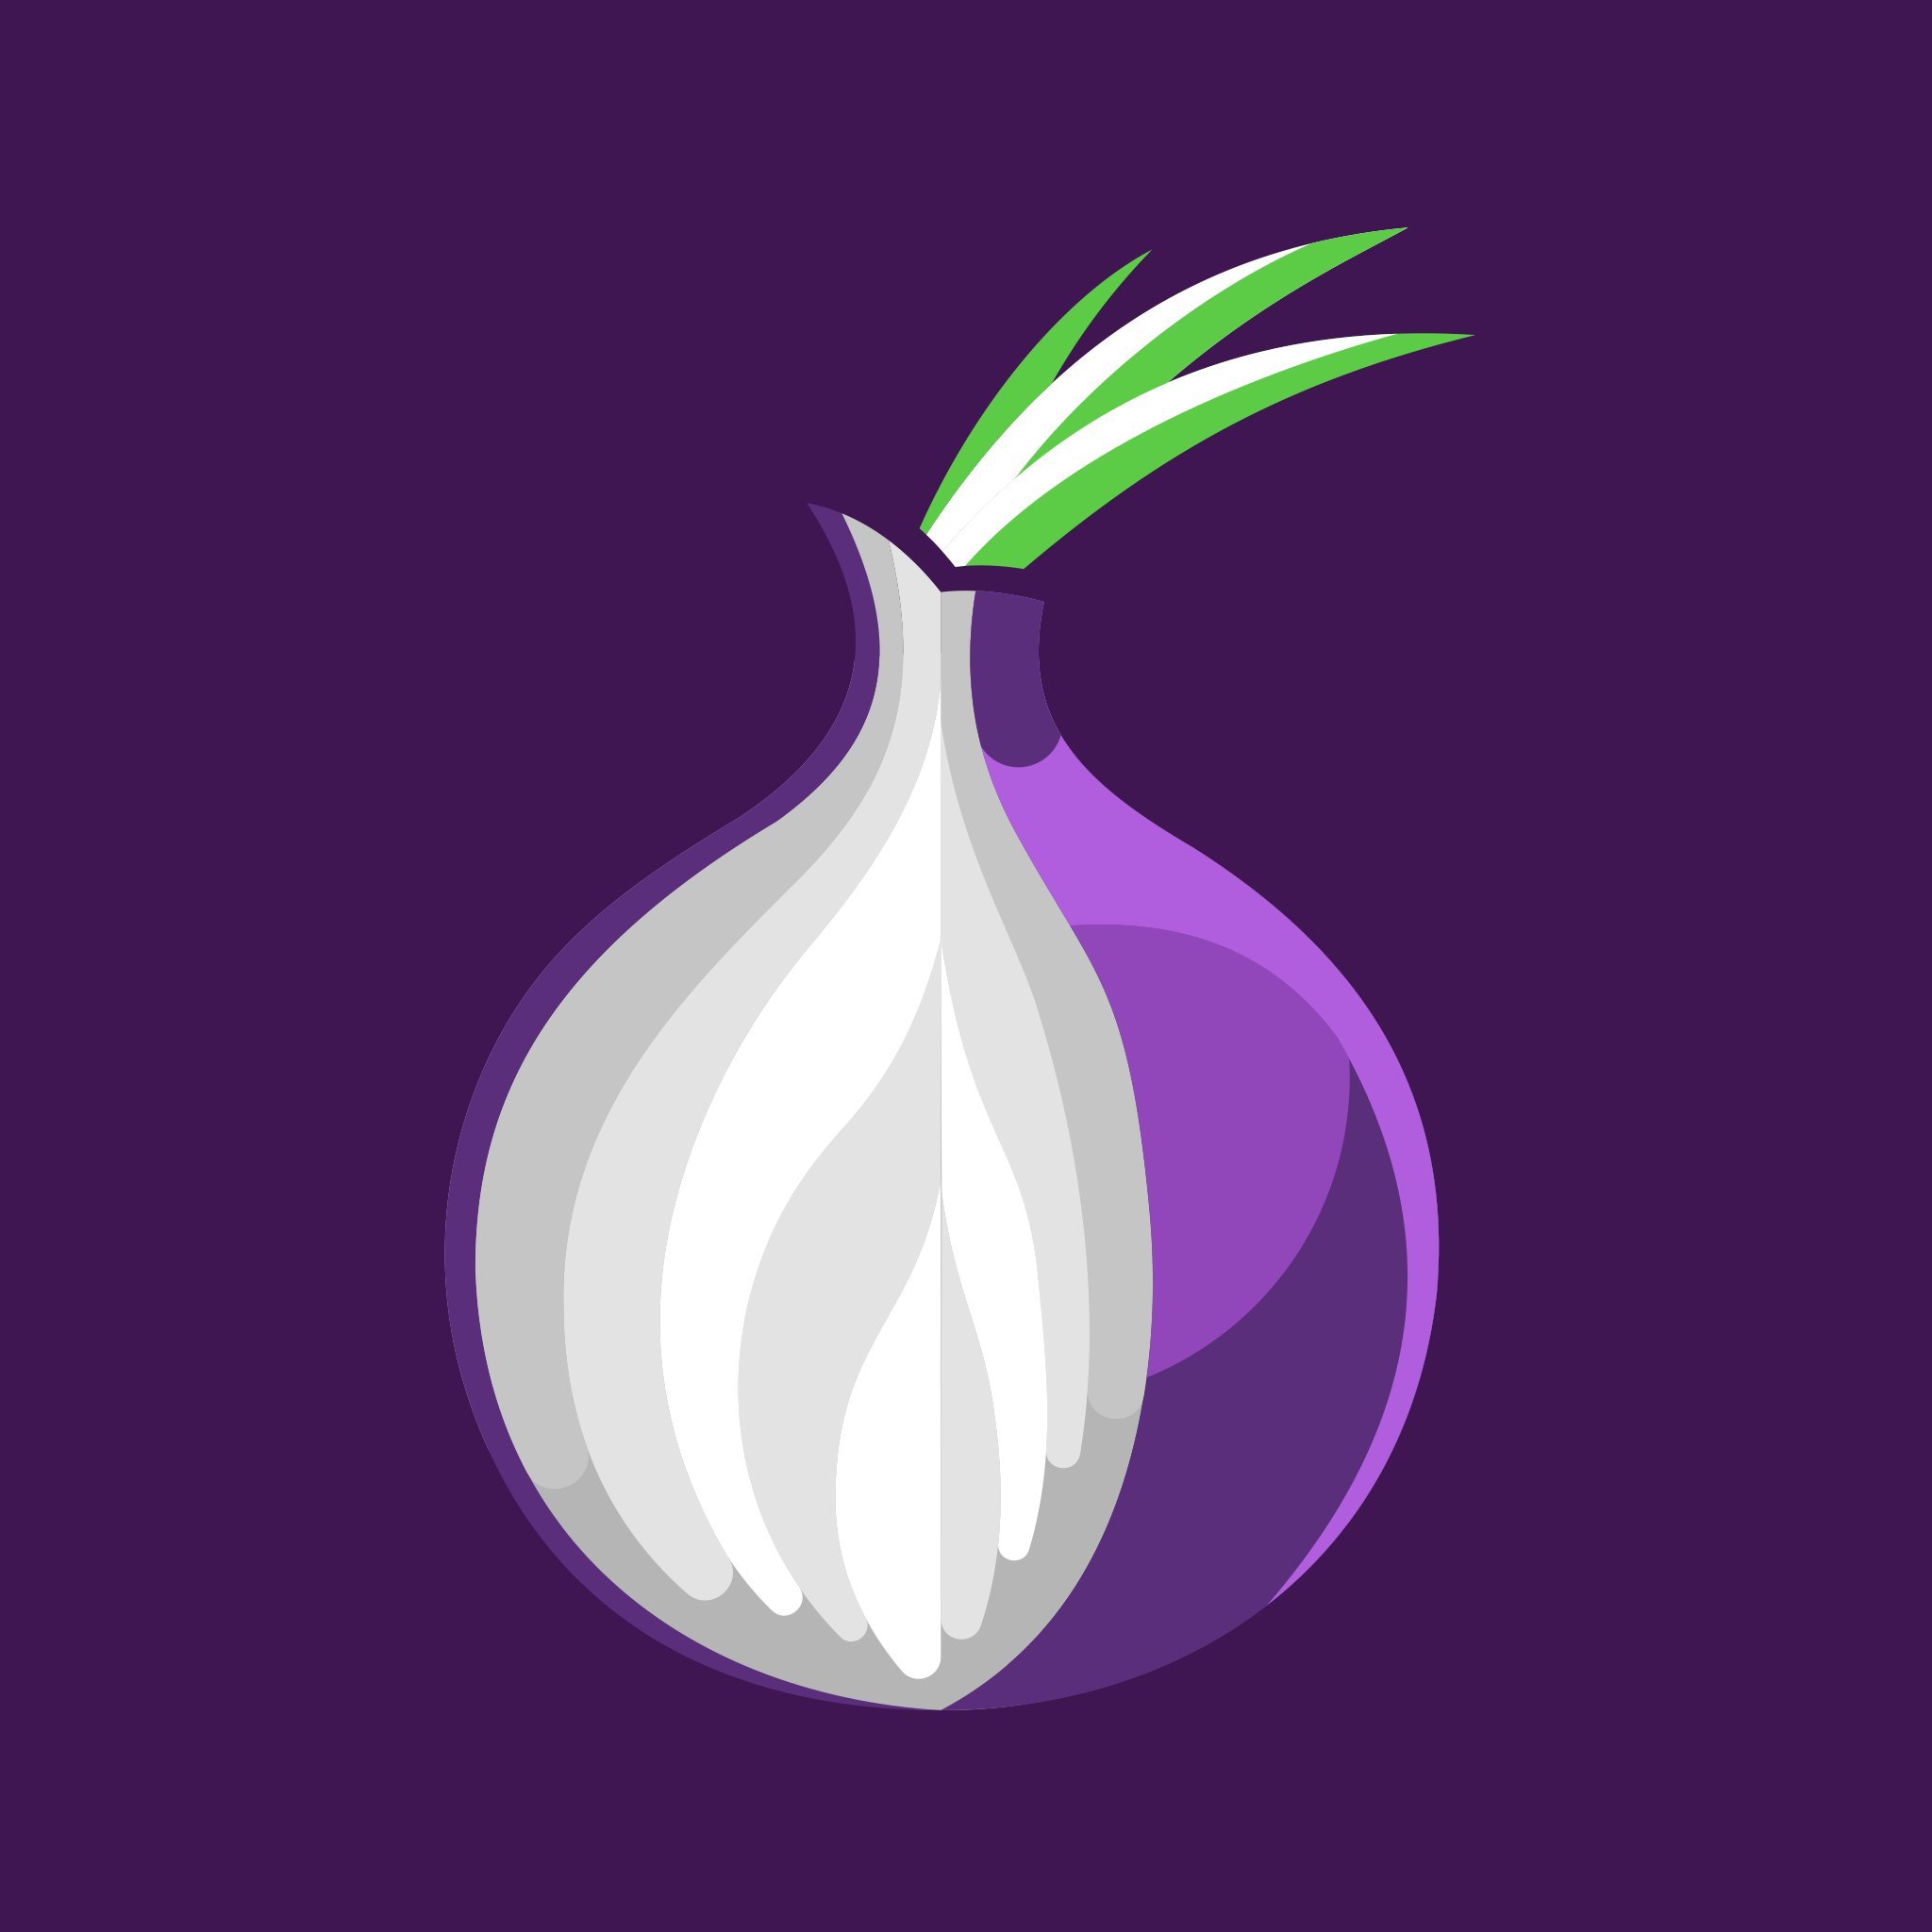 Darknet onion download не показывает видео tor browser мега